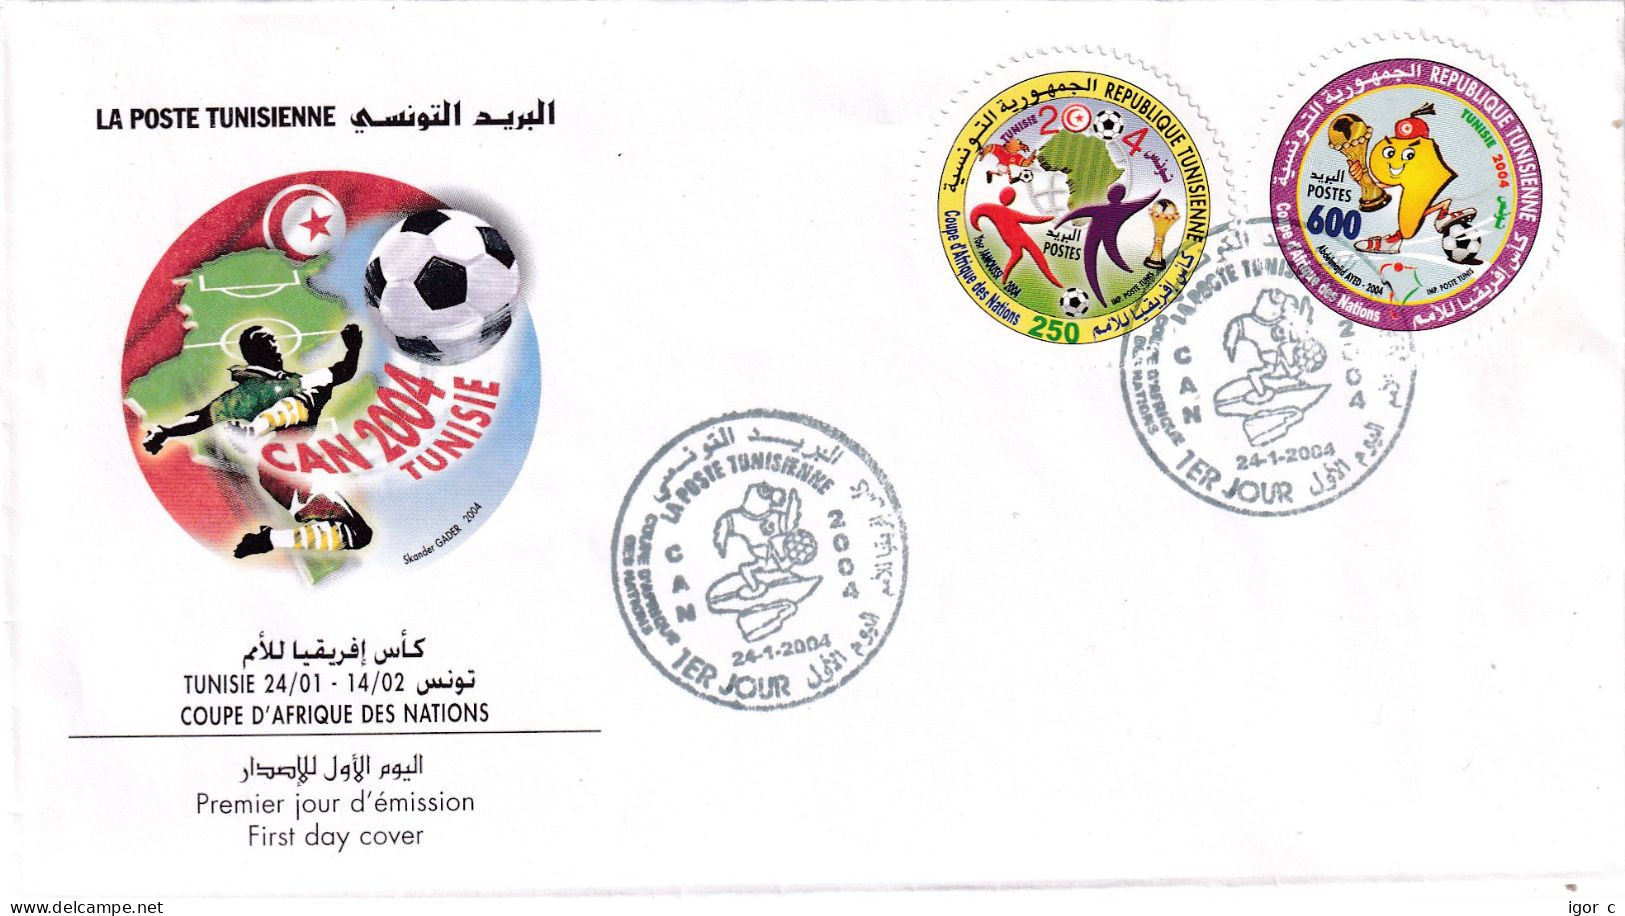 Tunis Tunisia 2004 Cover; Football Fussball Soccer Calcio; Coupe D'Afrique Des Nations - Afrika Cup